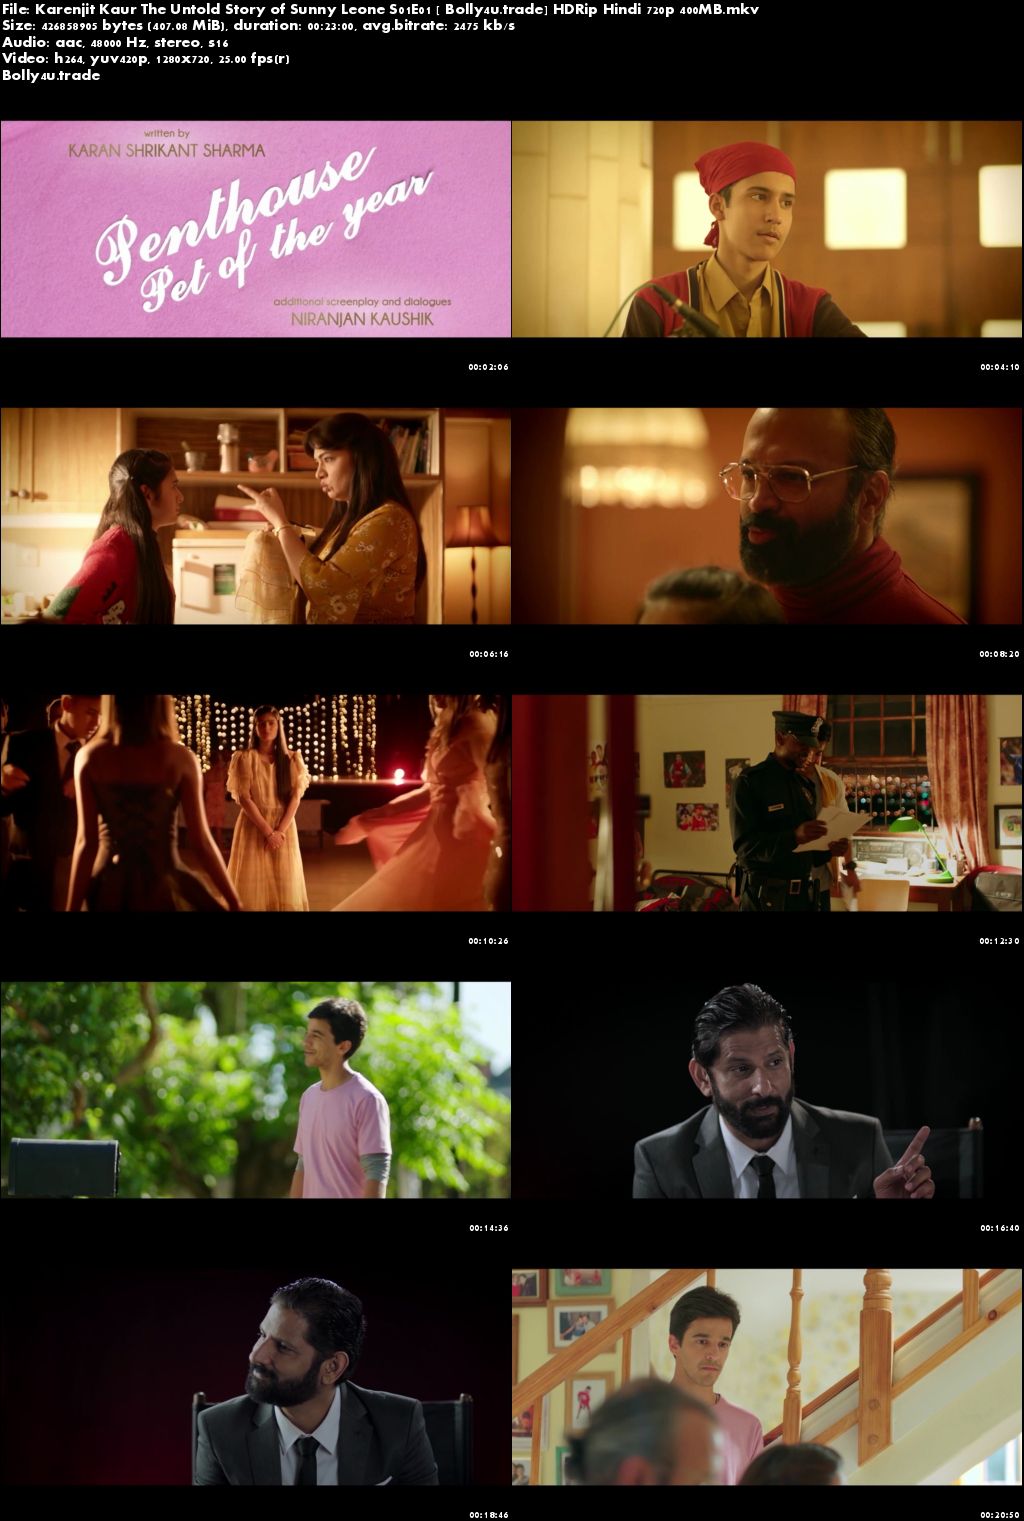 Karenjit Kaur The Untold Story of Sunny Leone S01E01 HDRip 400MB Hindi 720p Download